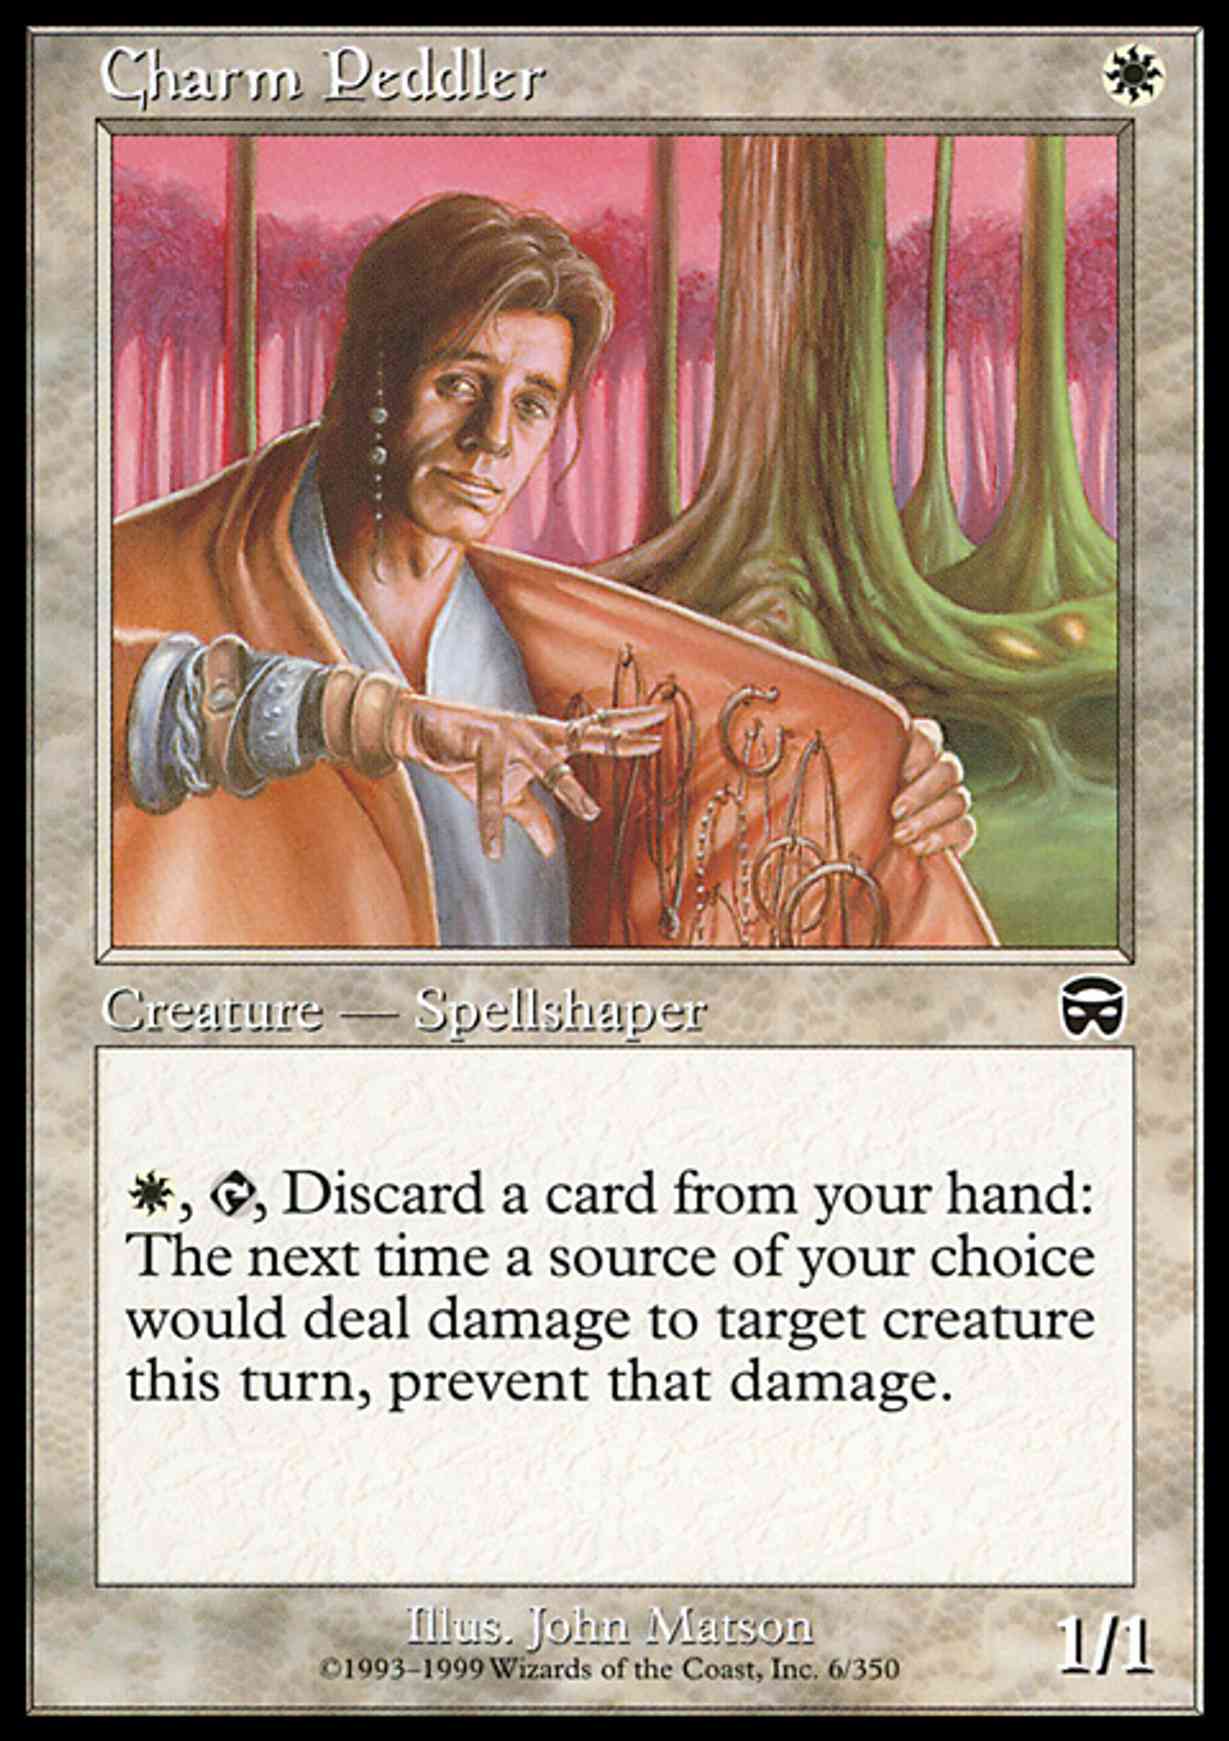 Charm Peddler magic card front